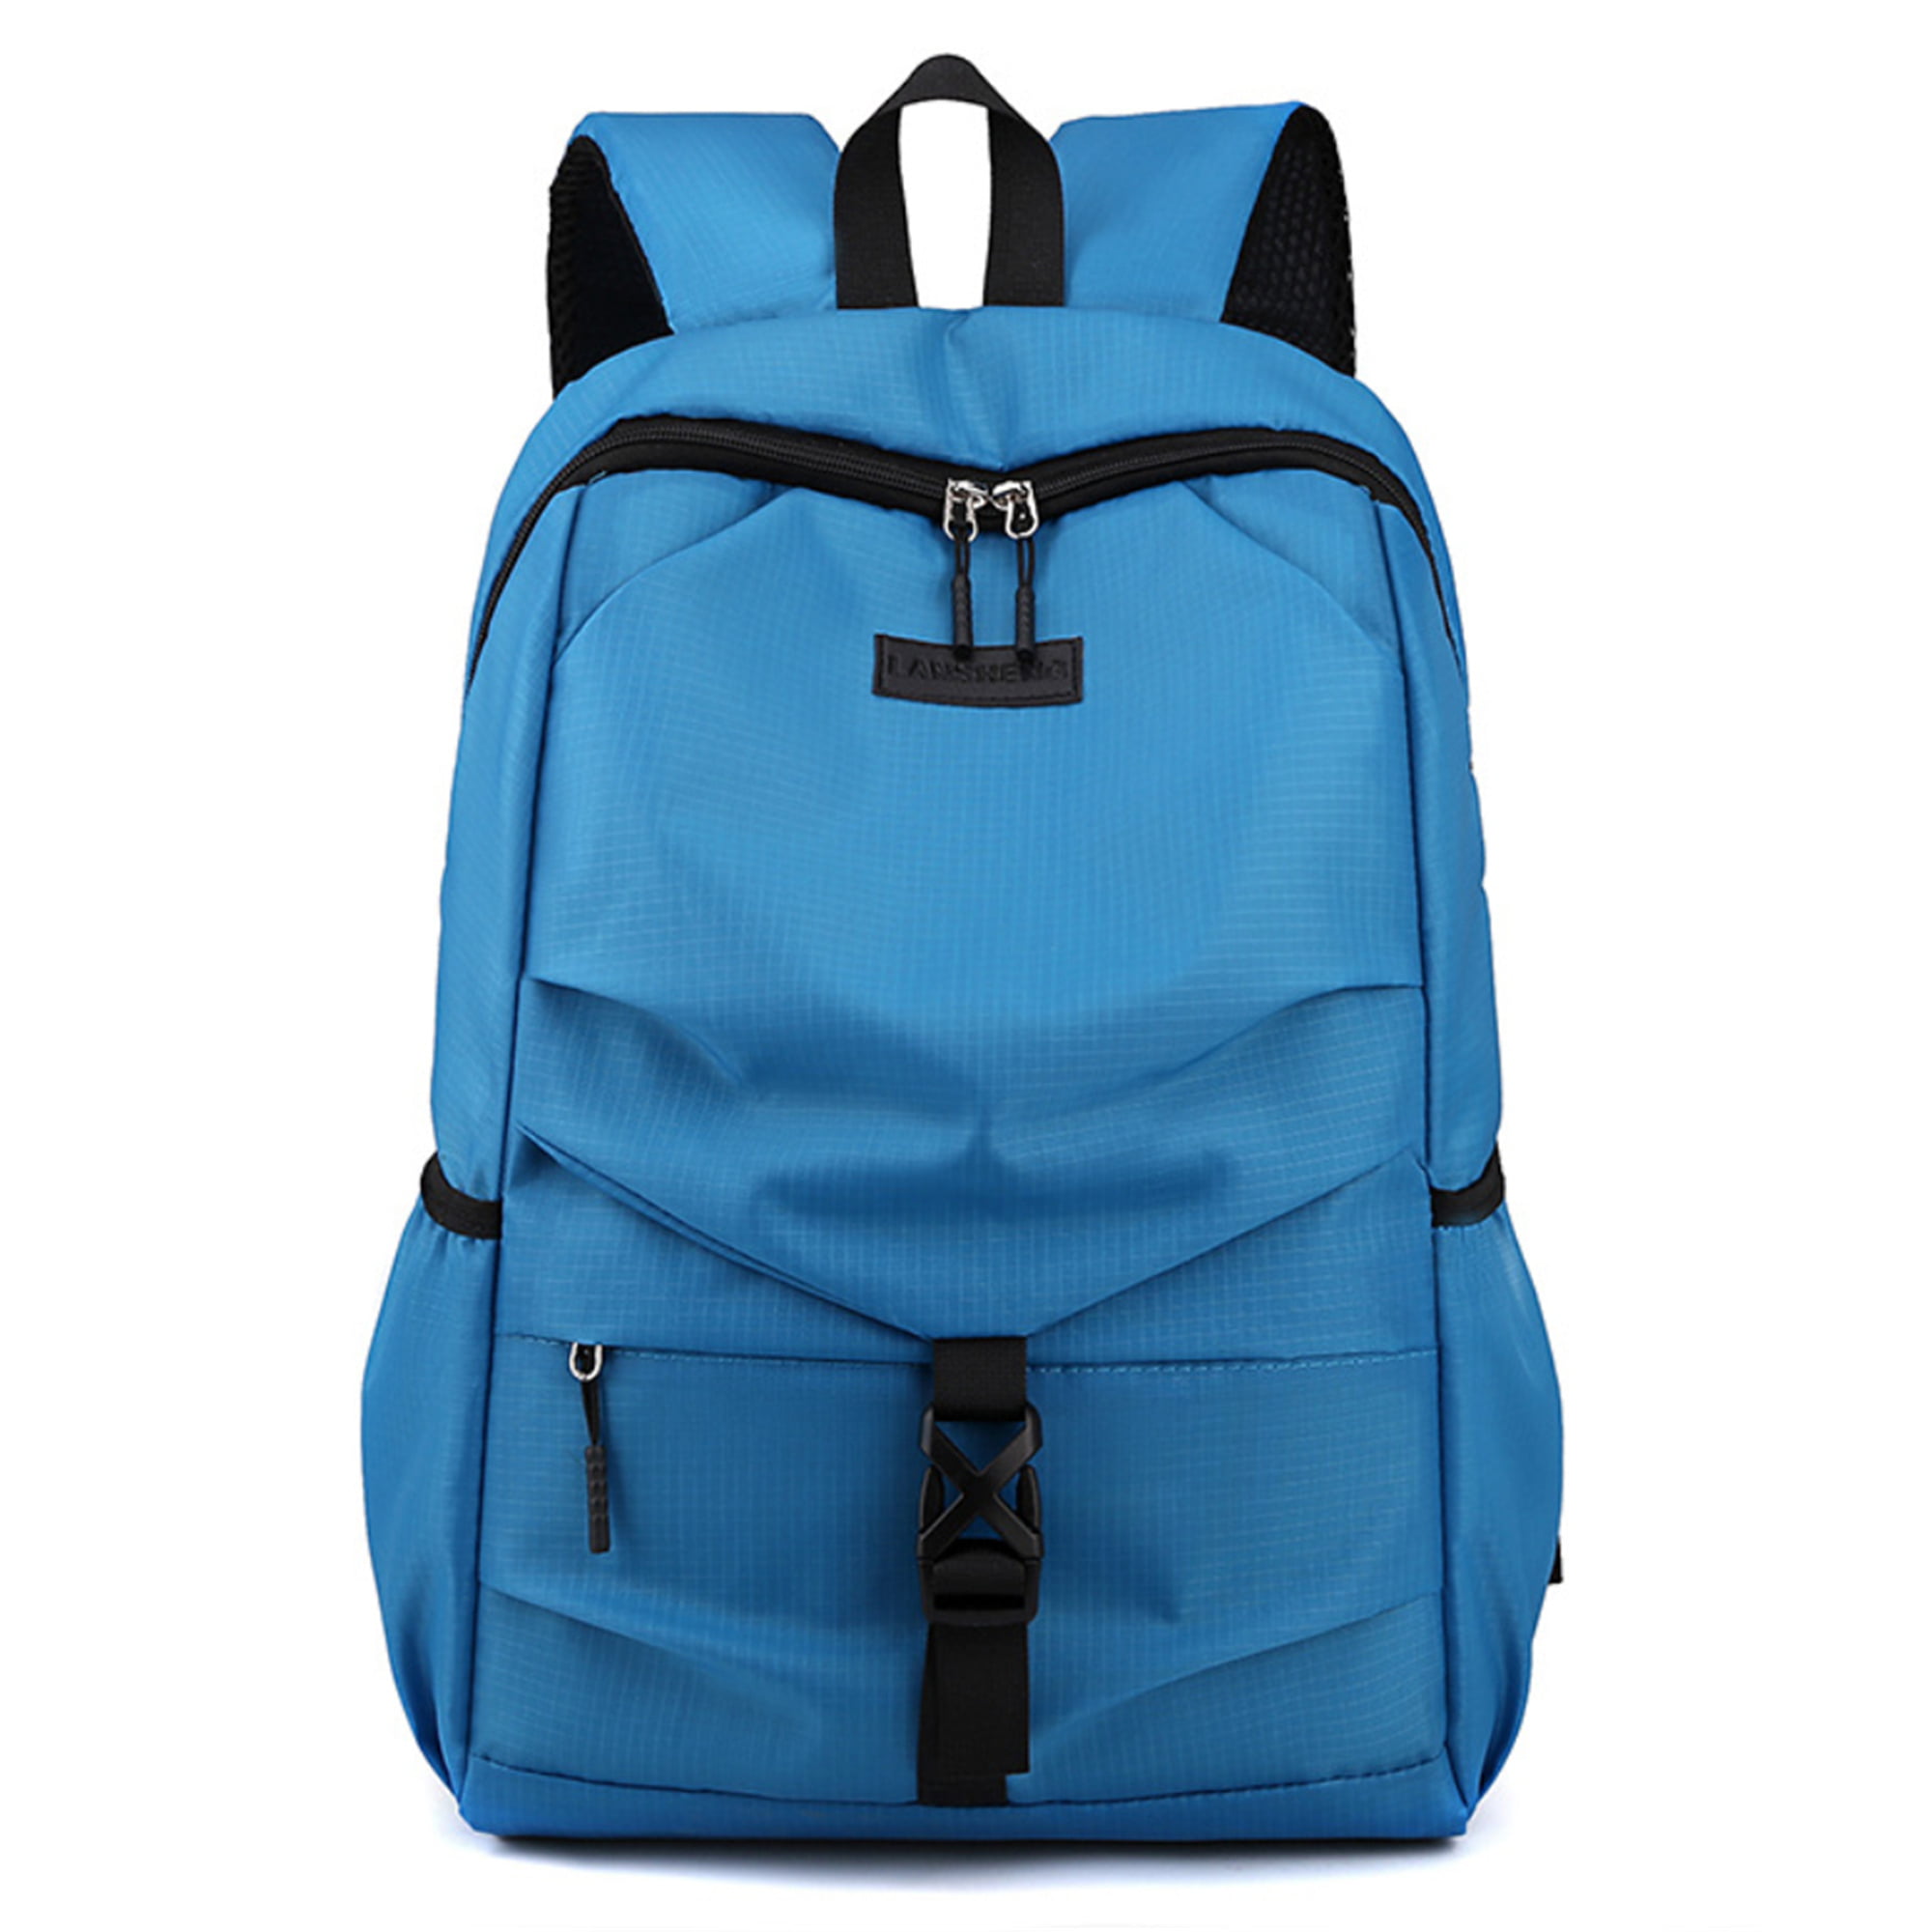 Travel Daypack Laptop Backpack College School Package Bookbag for Women Men Blue Flowers 